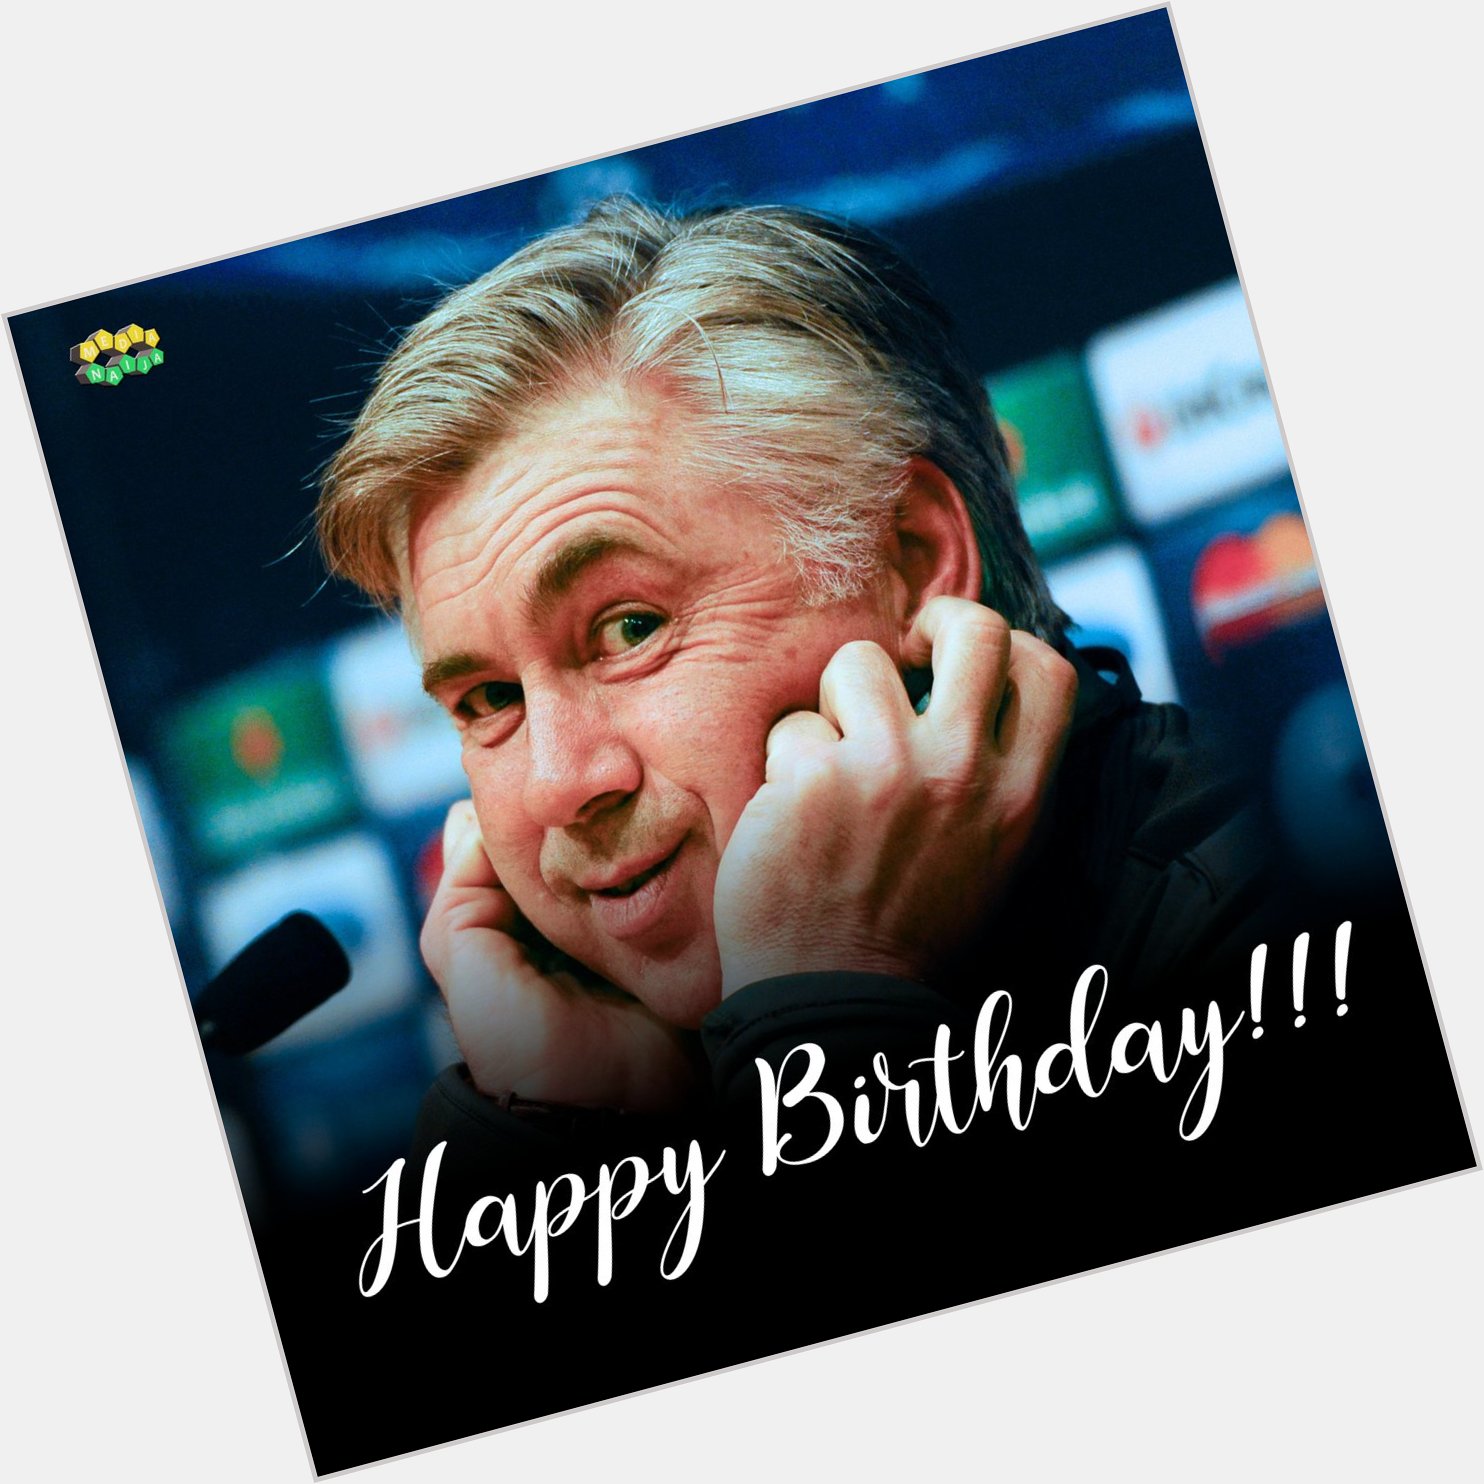 Happy Birthday to Carlo Ancelotti
He turns 62 today. 